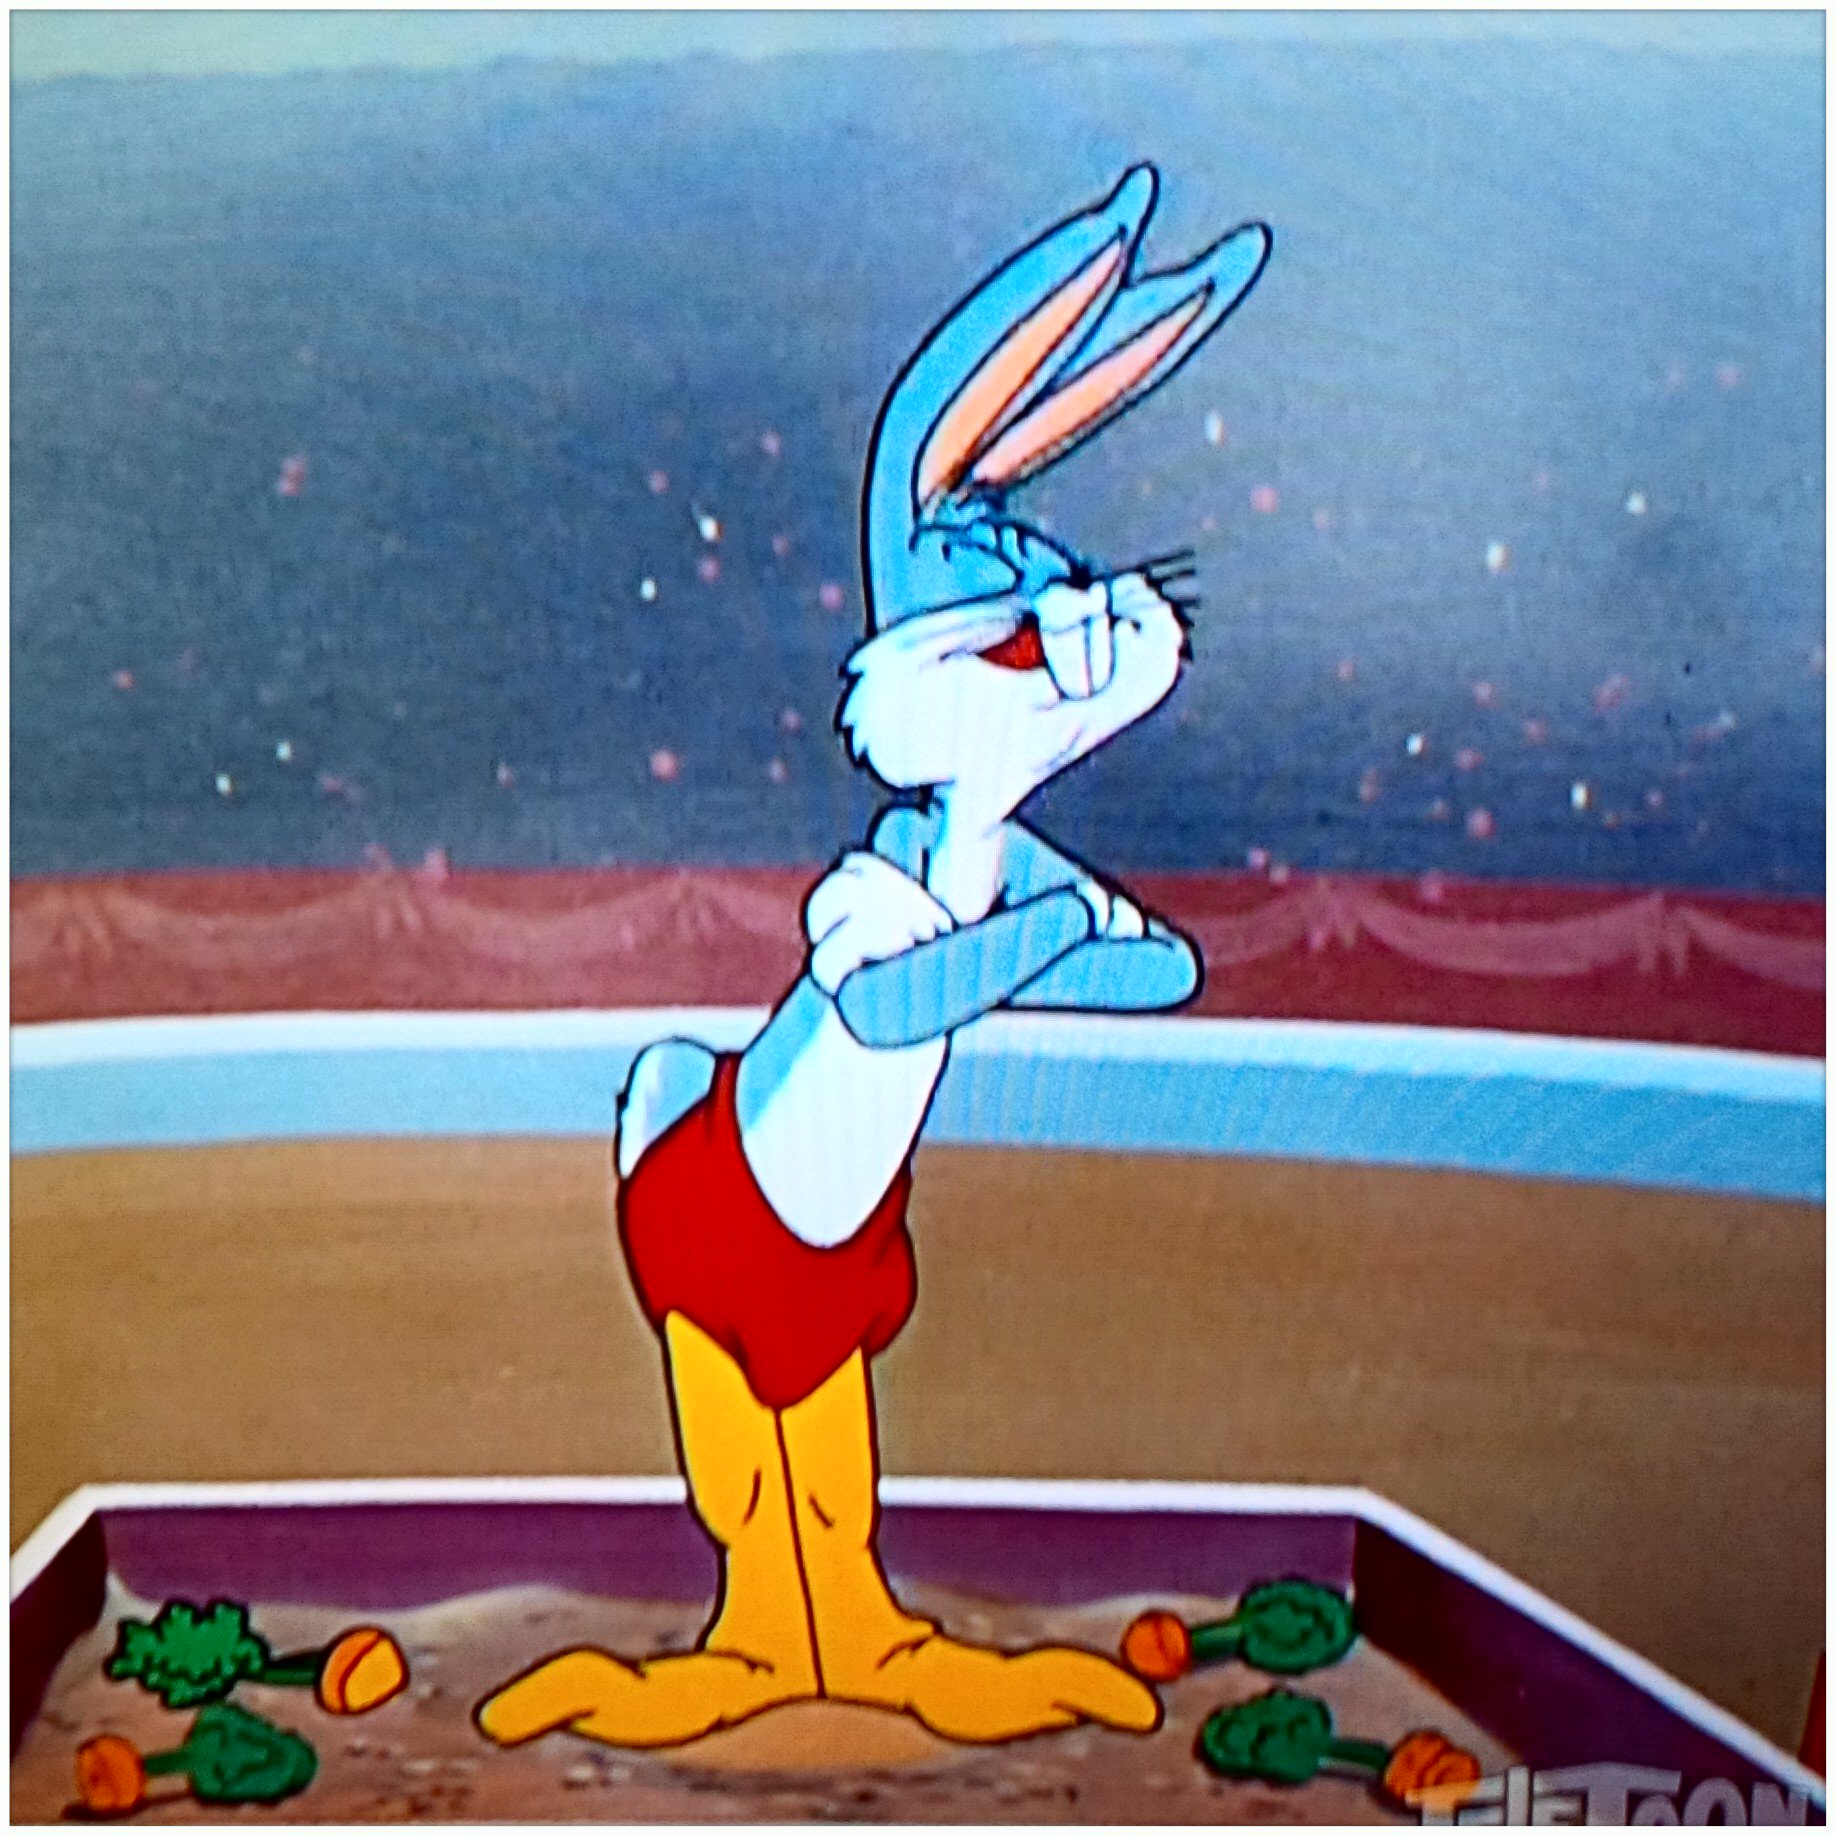 Tom Beyer on Twitter: "Big Top Bunny on @teletoon now. Bugs Bunny never  gets old #GuiltyPleasure https://t.co/xha5Z7Nb0L" / Twitter